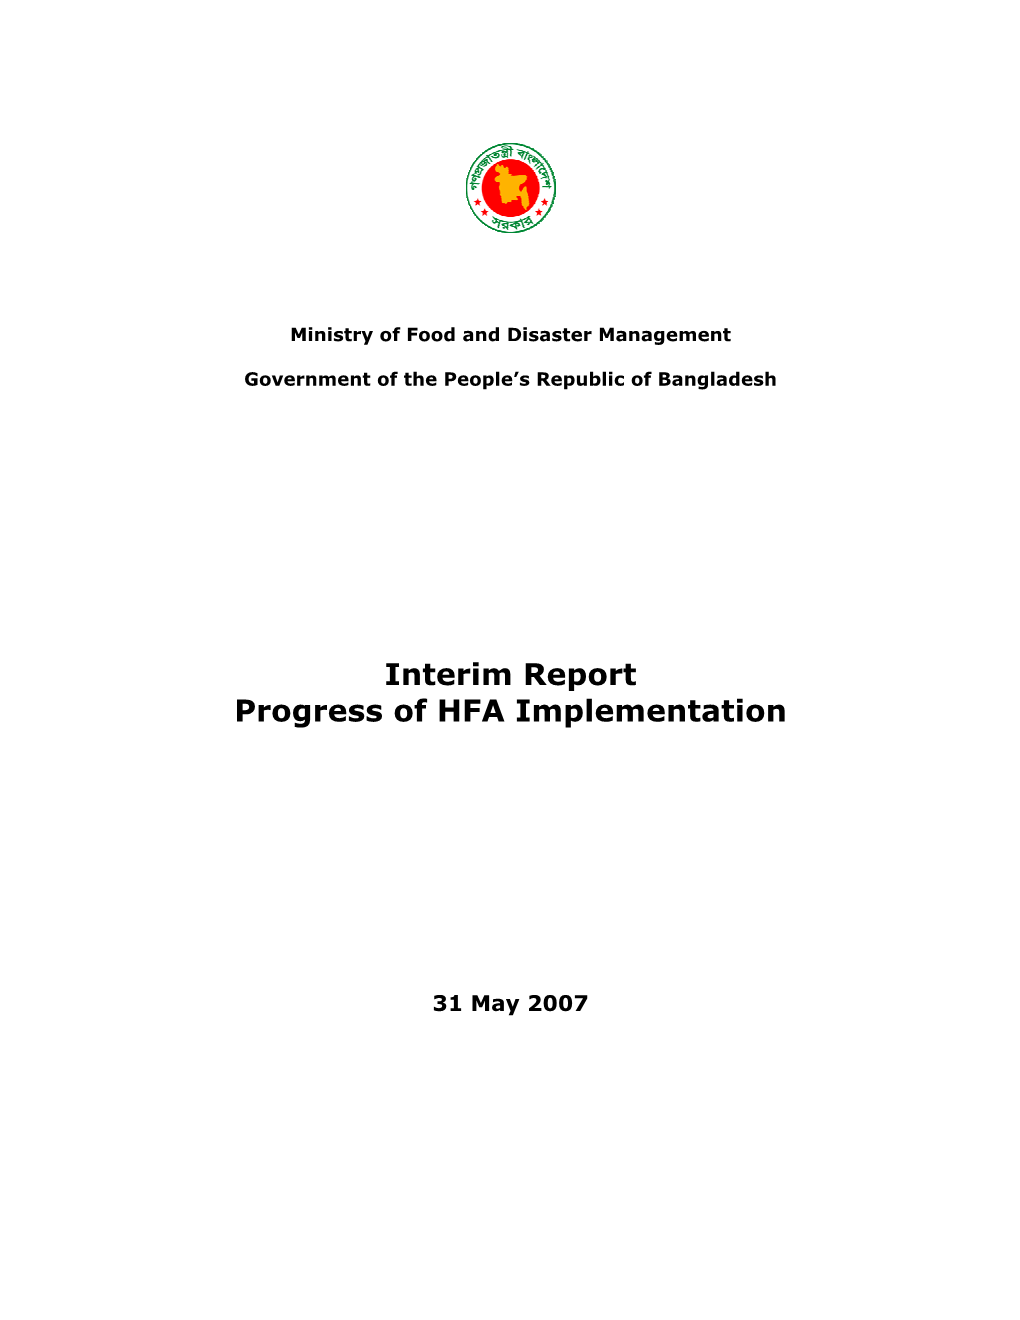 Interim Report Progress of HFA Implementation